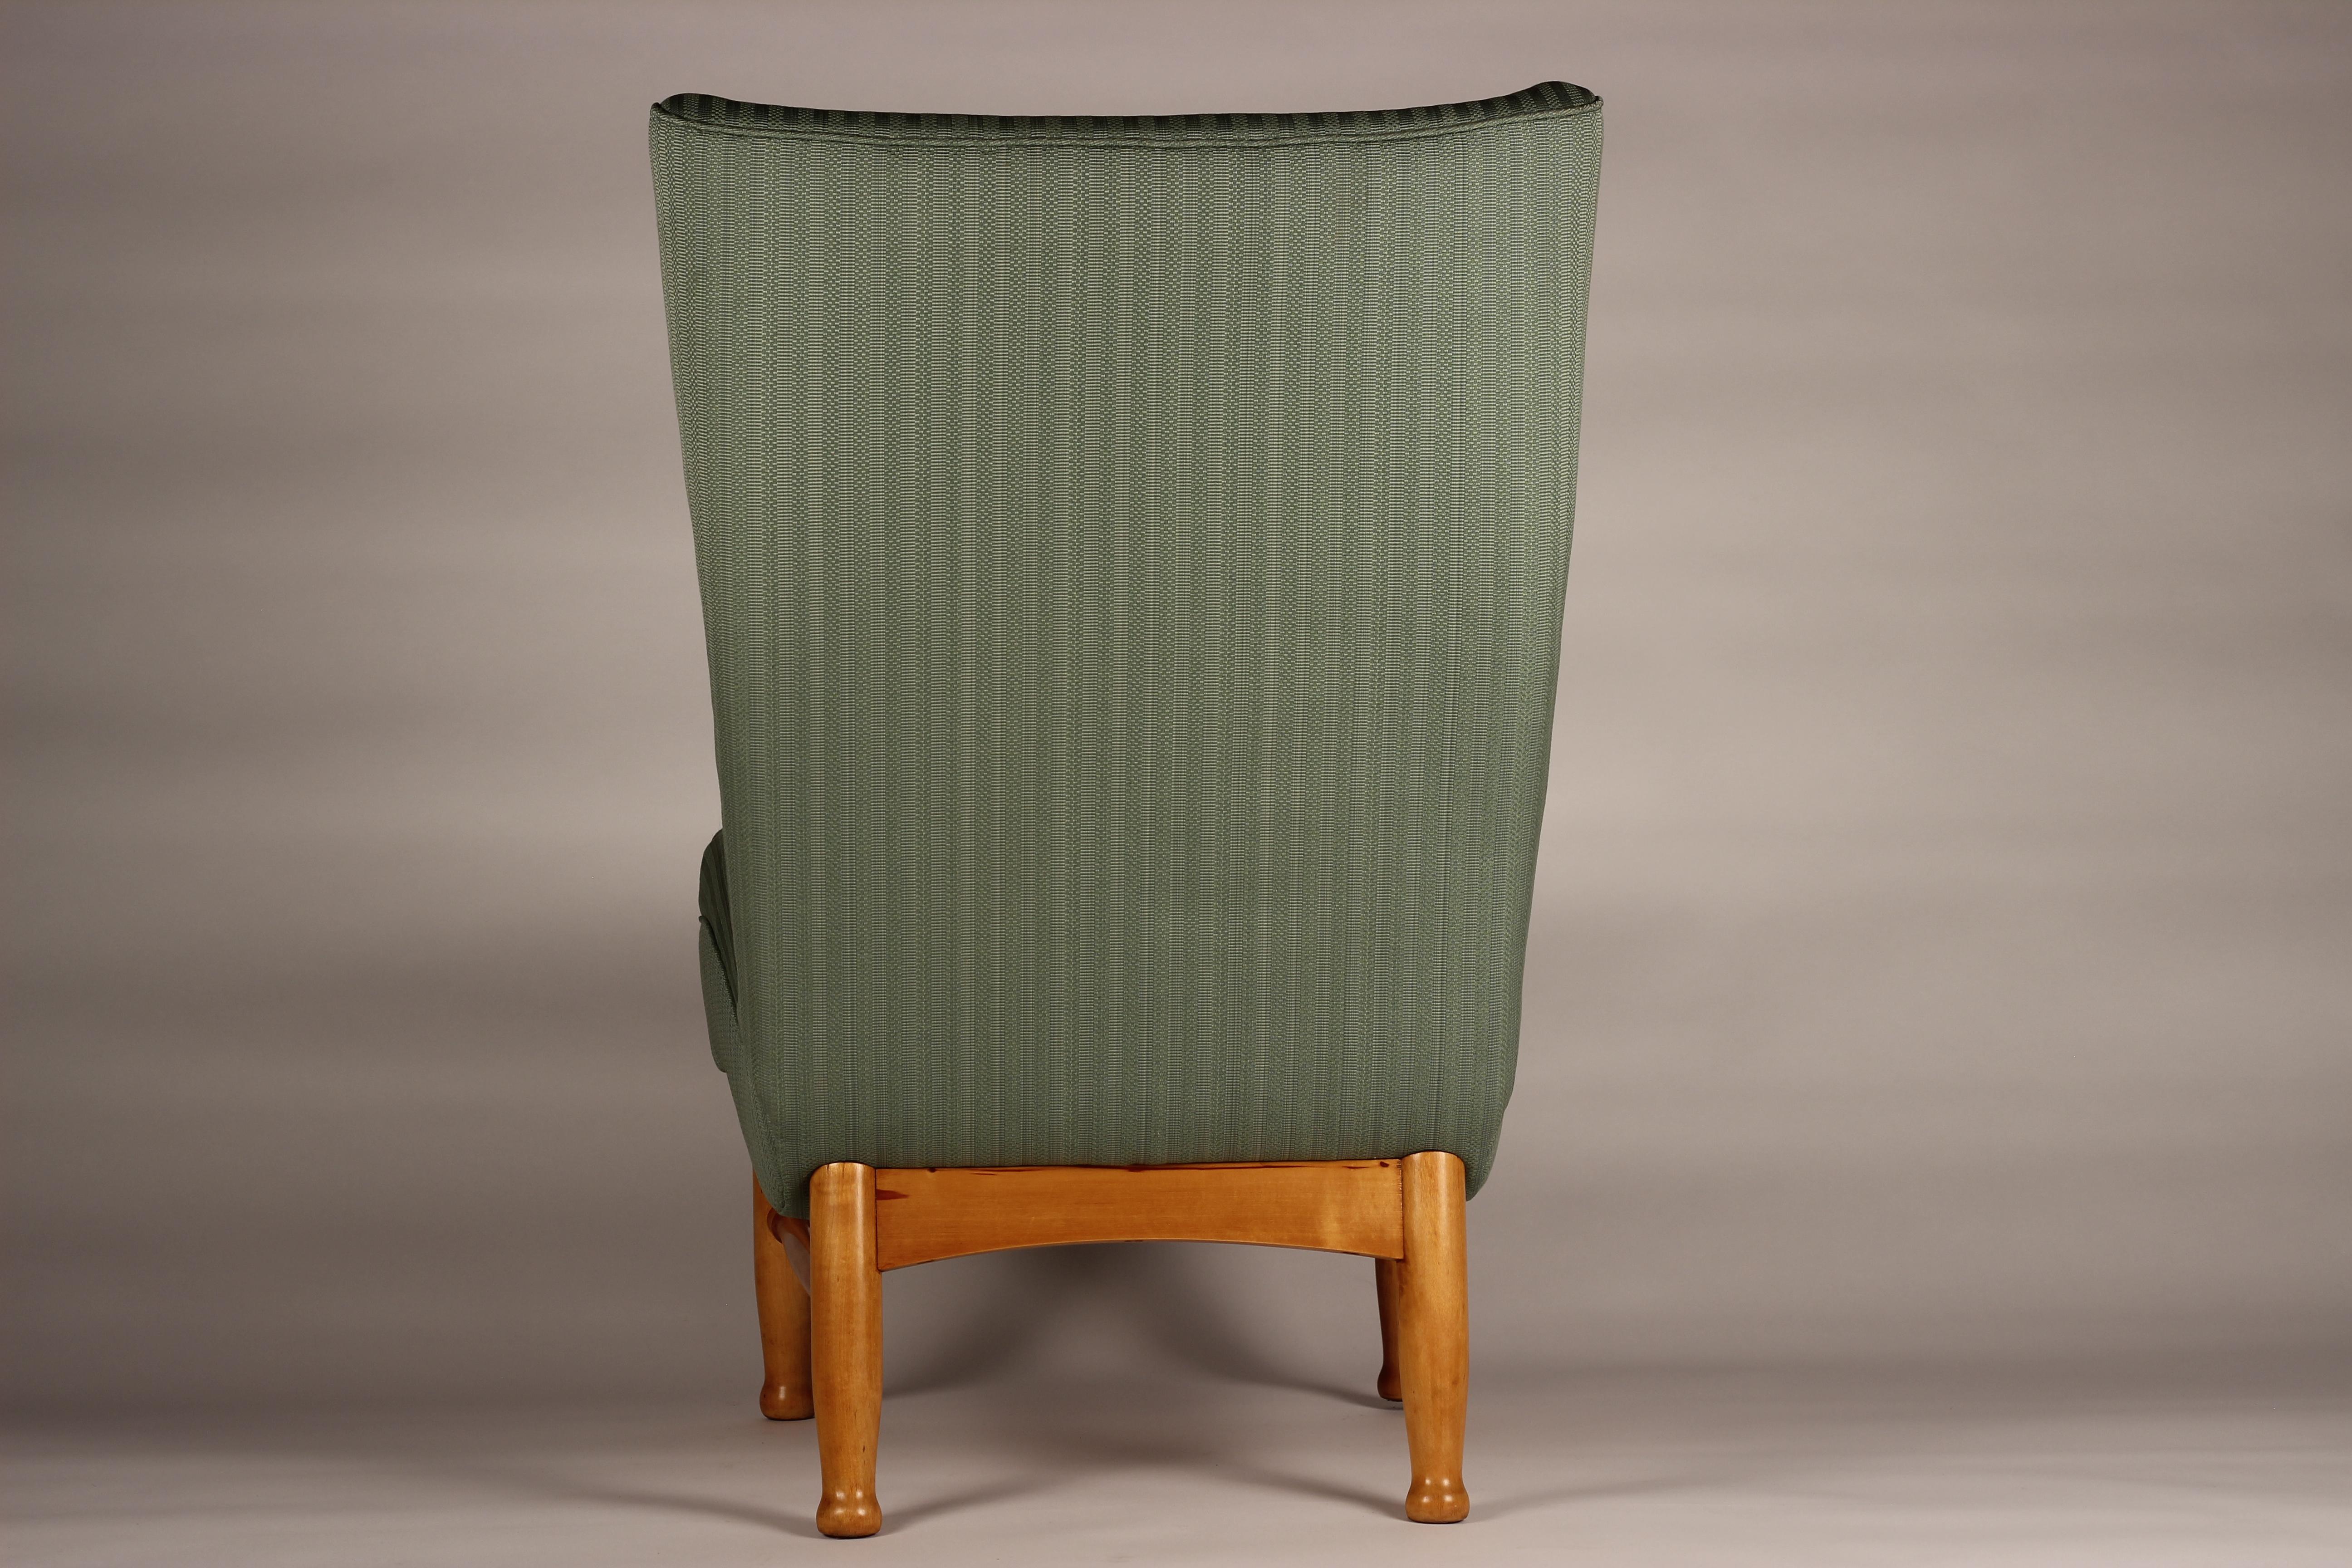 Mid-20th Century Scandinavian Modern Chair by Elias Svedberg for Nordiska Kompaniet Sweden 1950’s